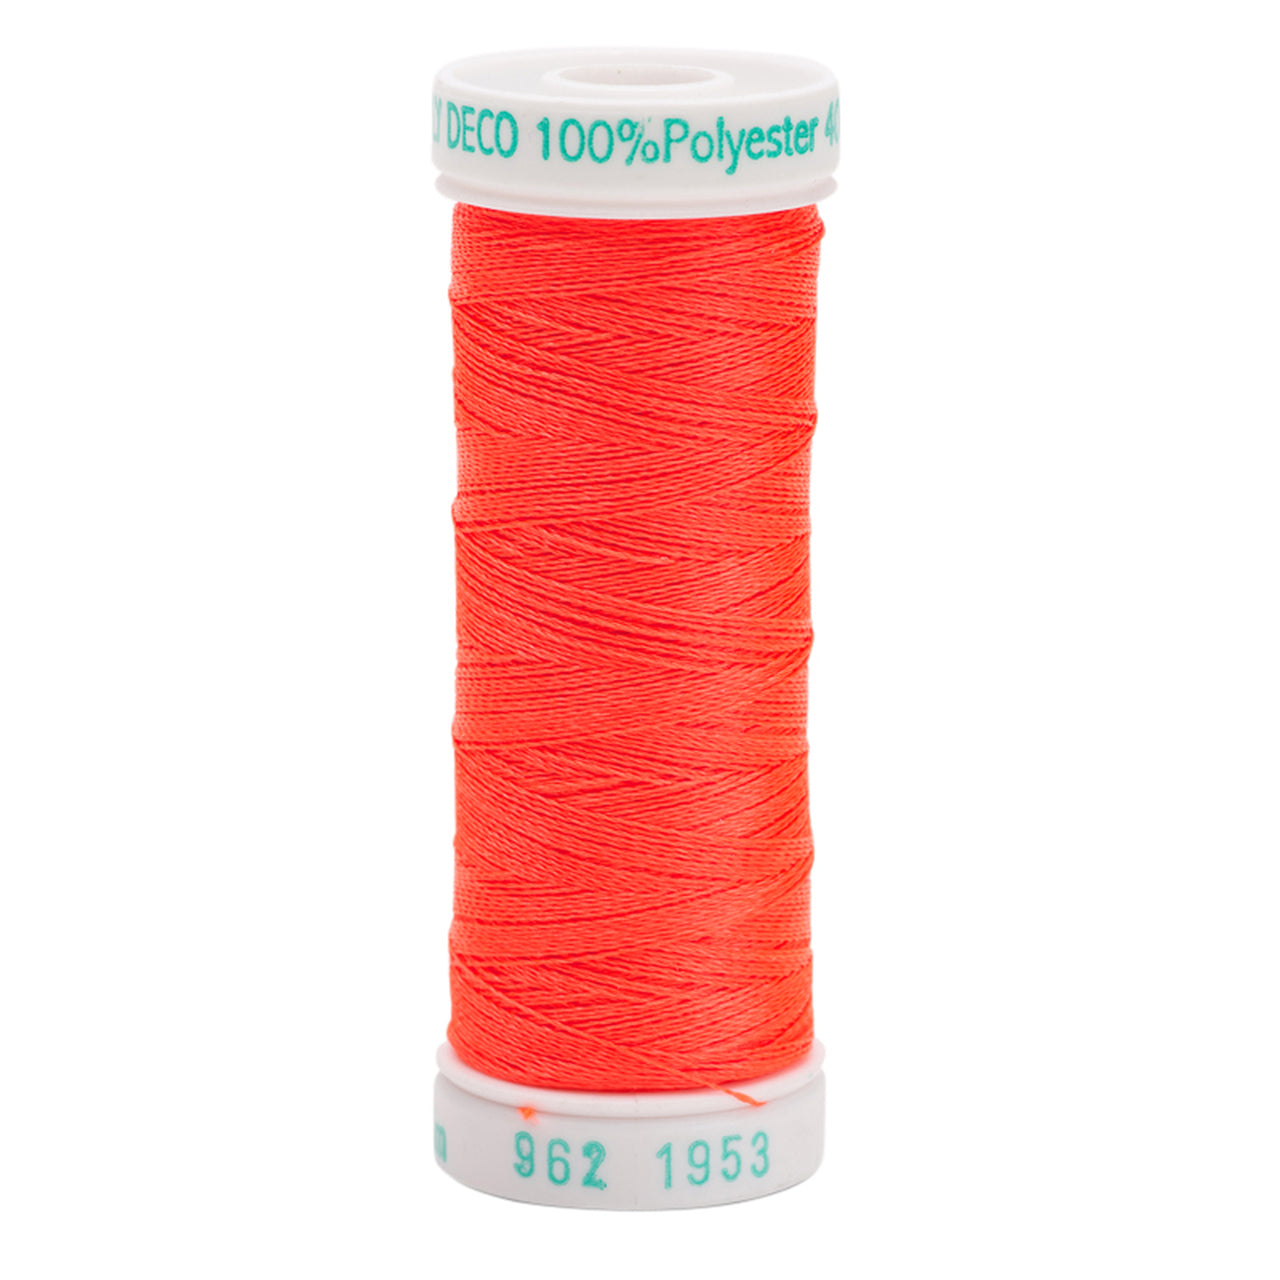 Sulky 40 Wt. Poly Deco Thread - Reds, Oranges, Yellows